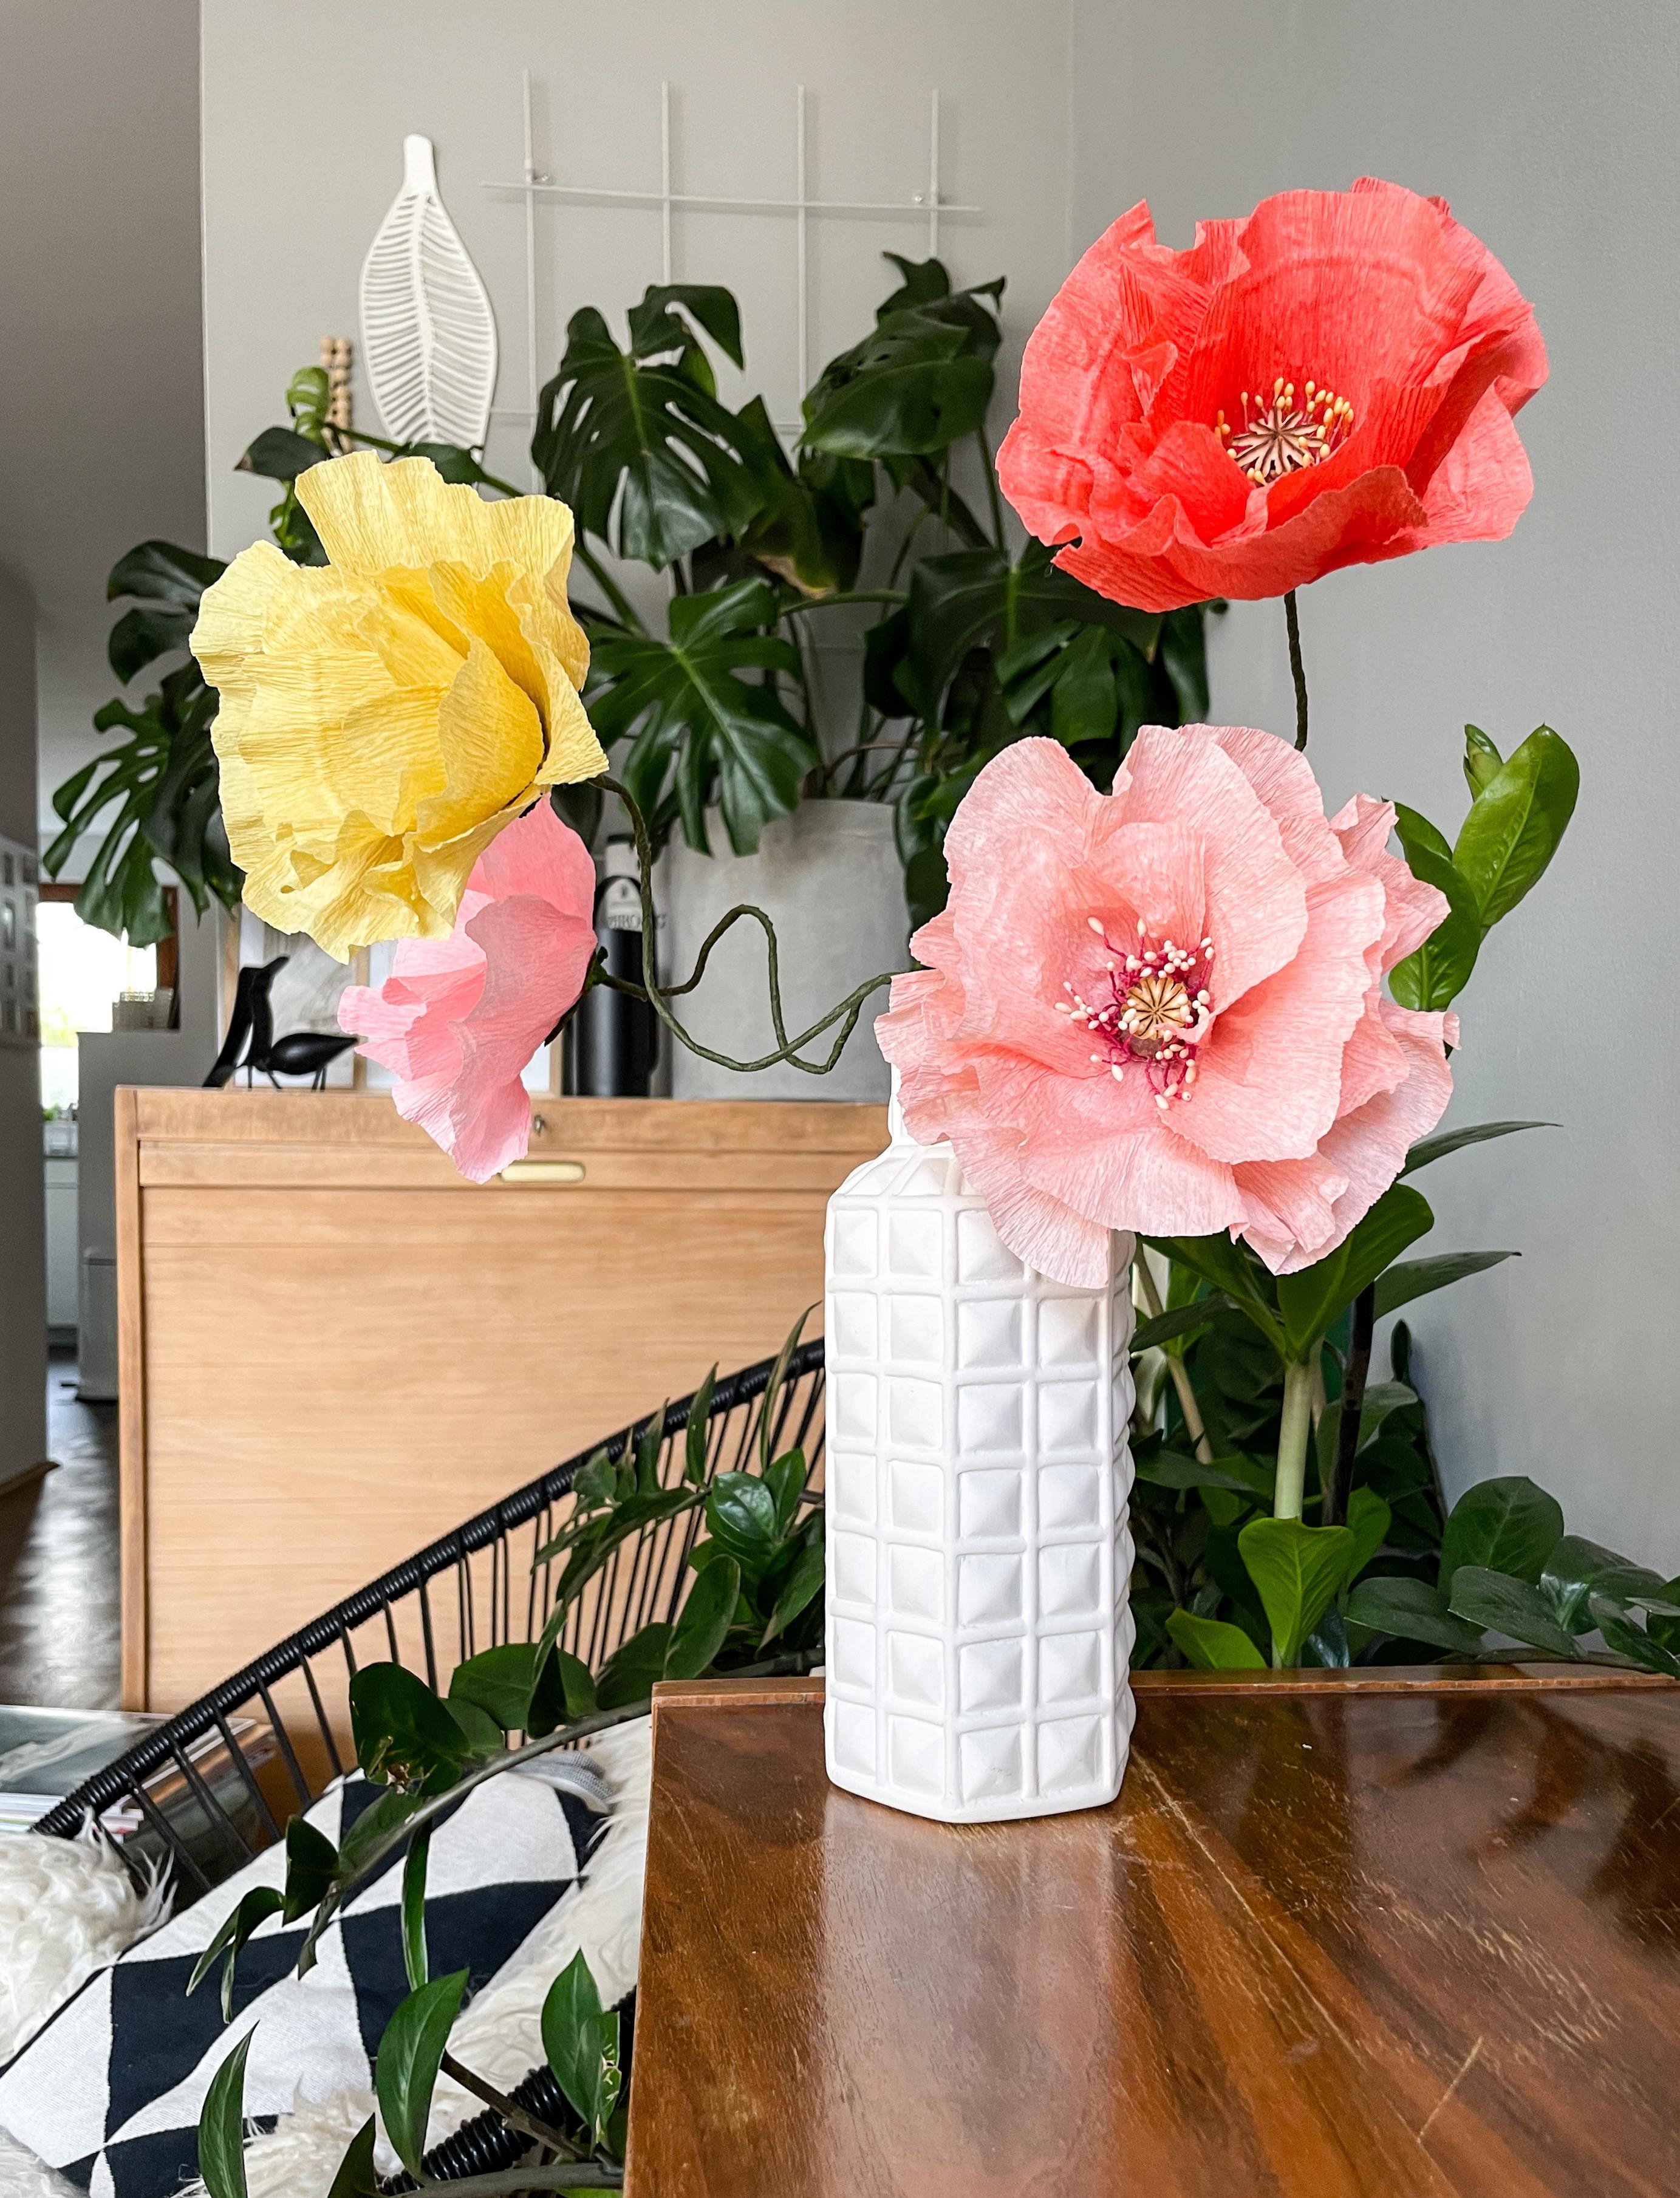 Mohnblumen 🌸 DIY aus Krepppapier

#Diy #selbstgemacht #Papier #Blumen #Blumenstrauss #Papierblumem